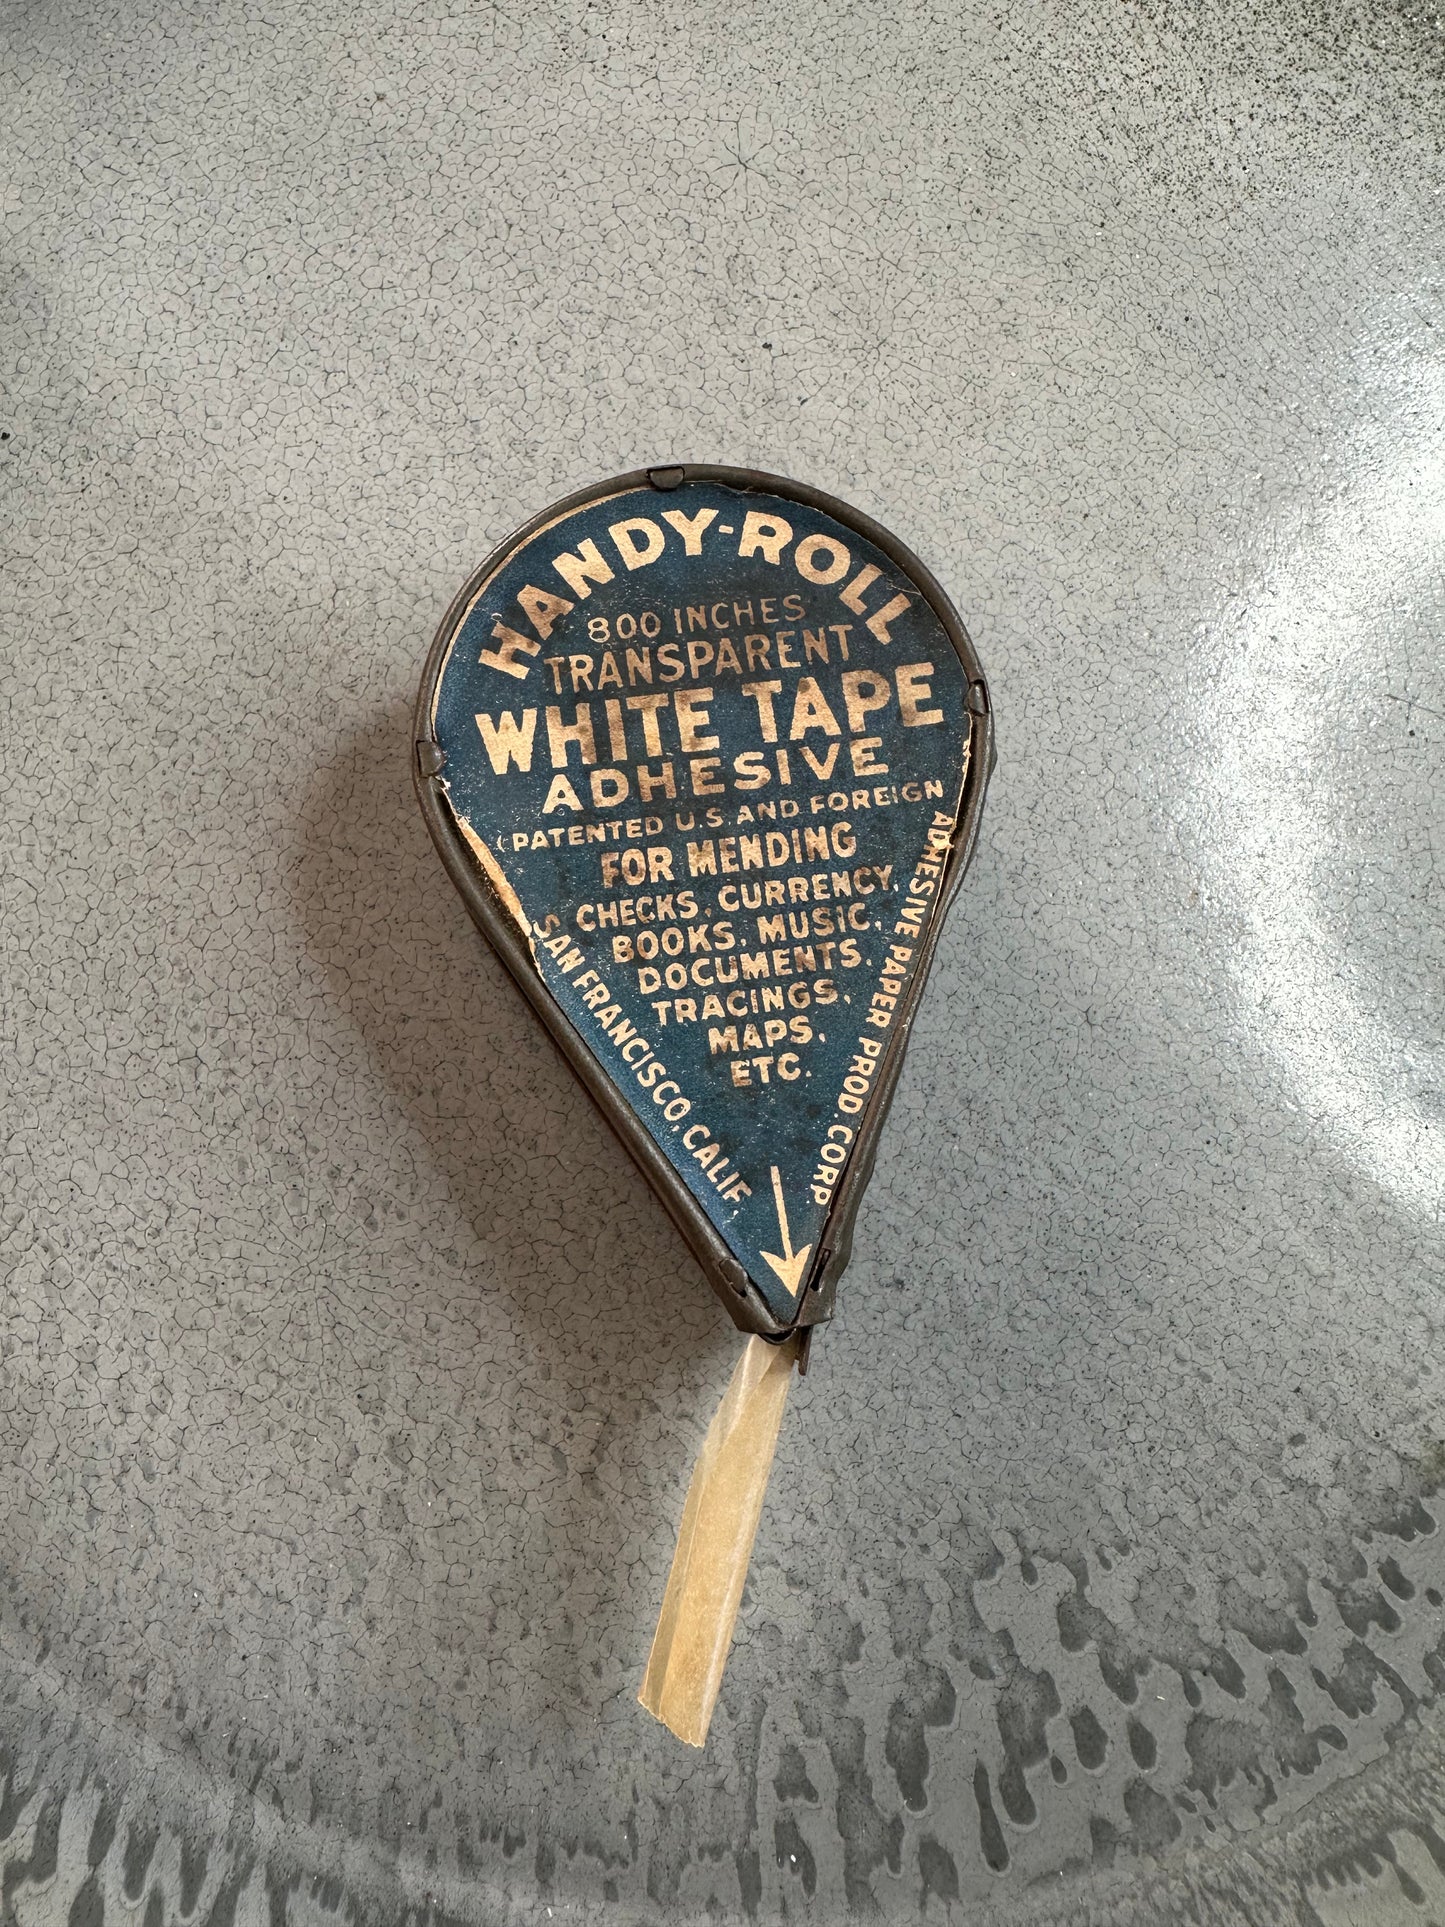 Vintage handy roll white tape